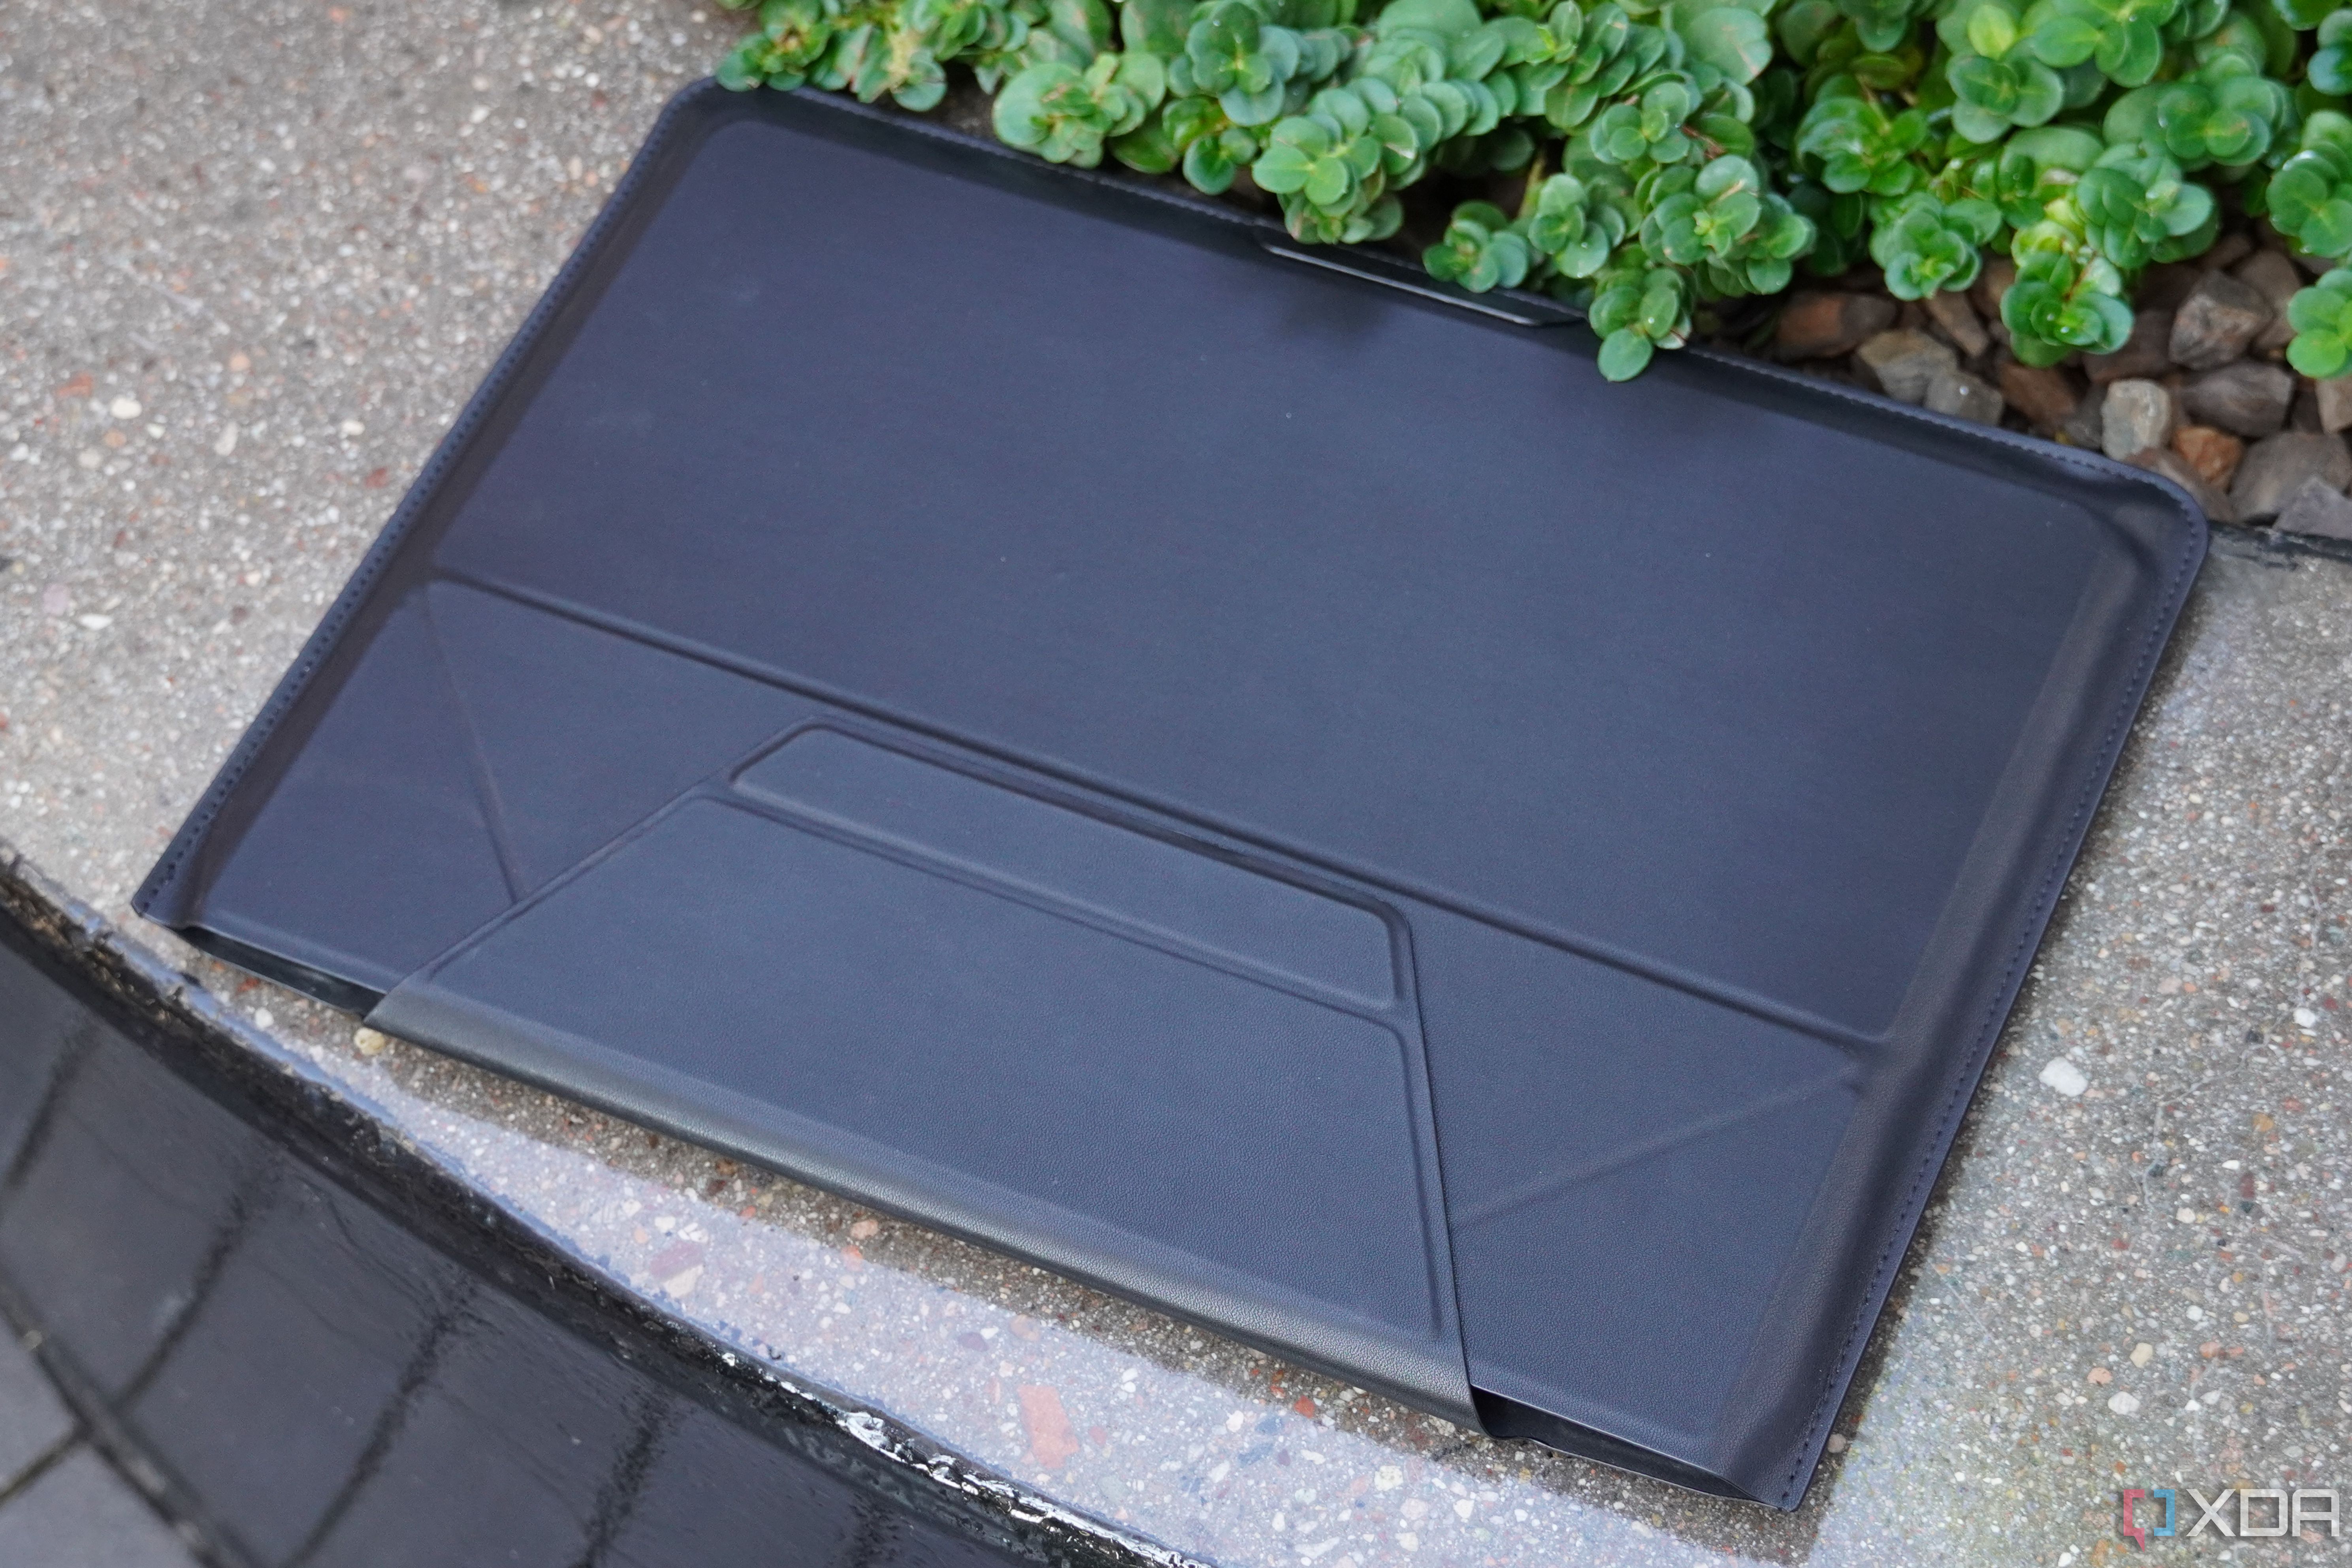 Mott's laptop carry sleeve on a ledge.